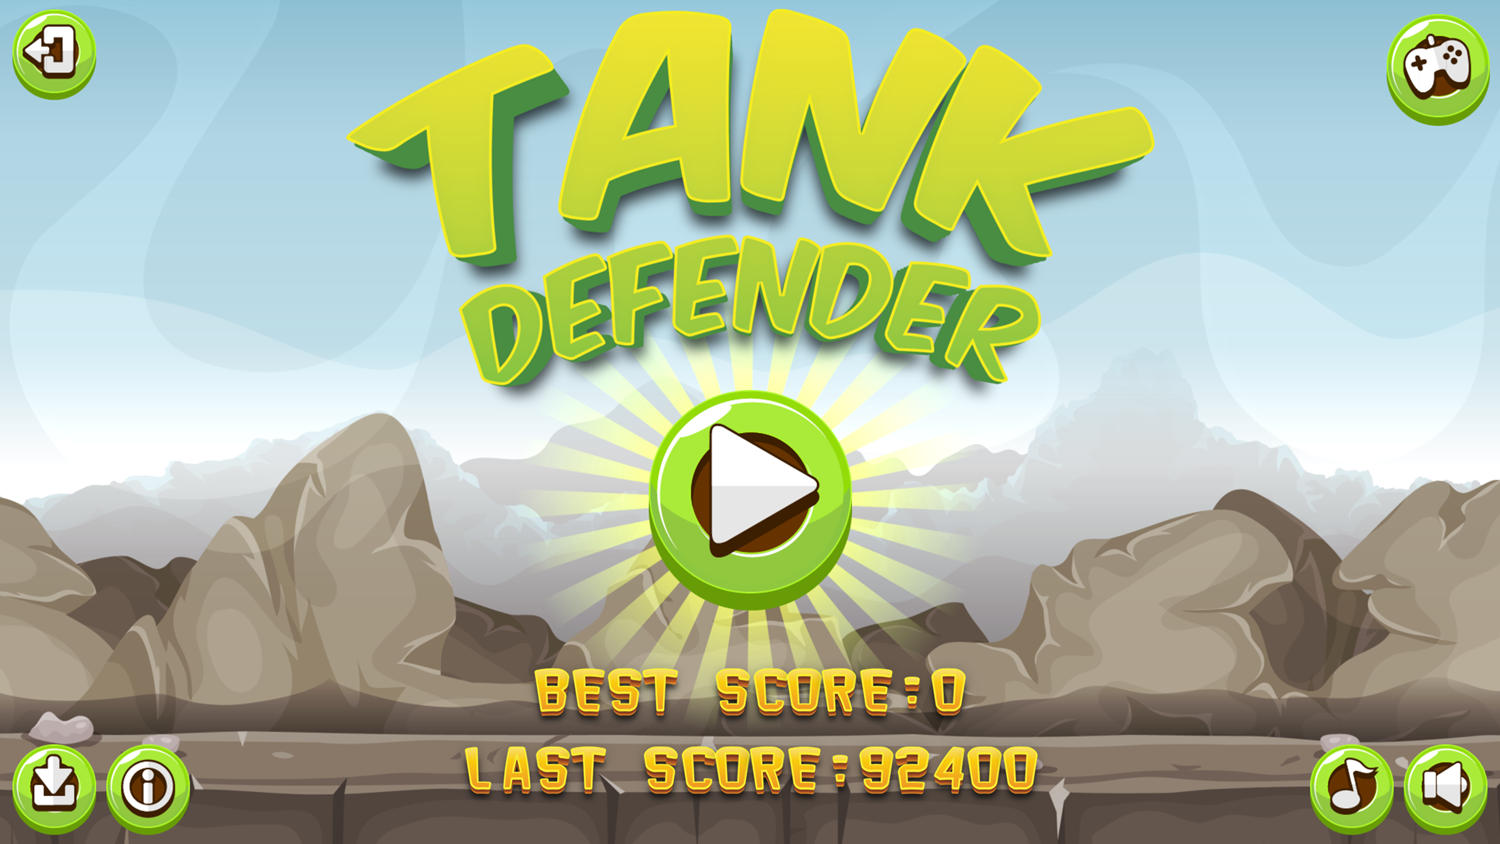 Tank Defender Game Welcome Screenshot.